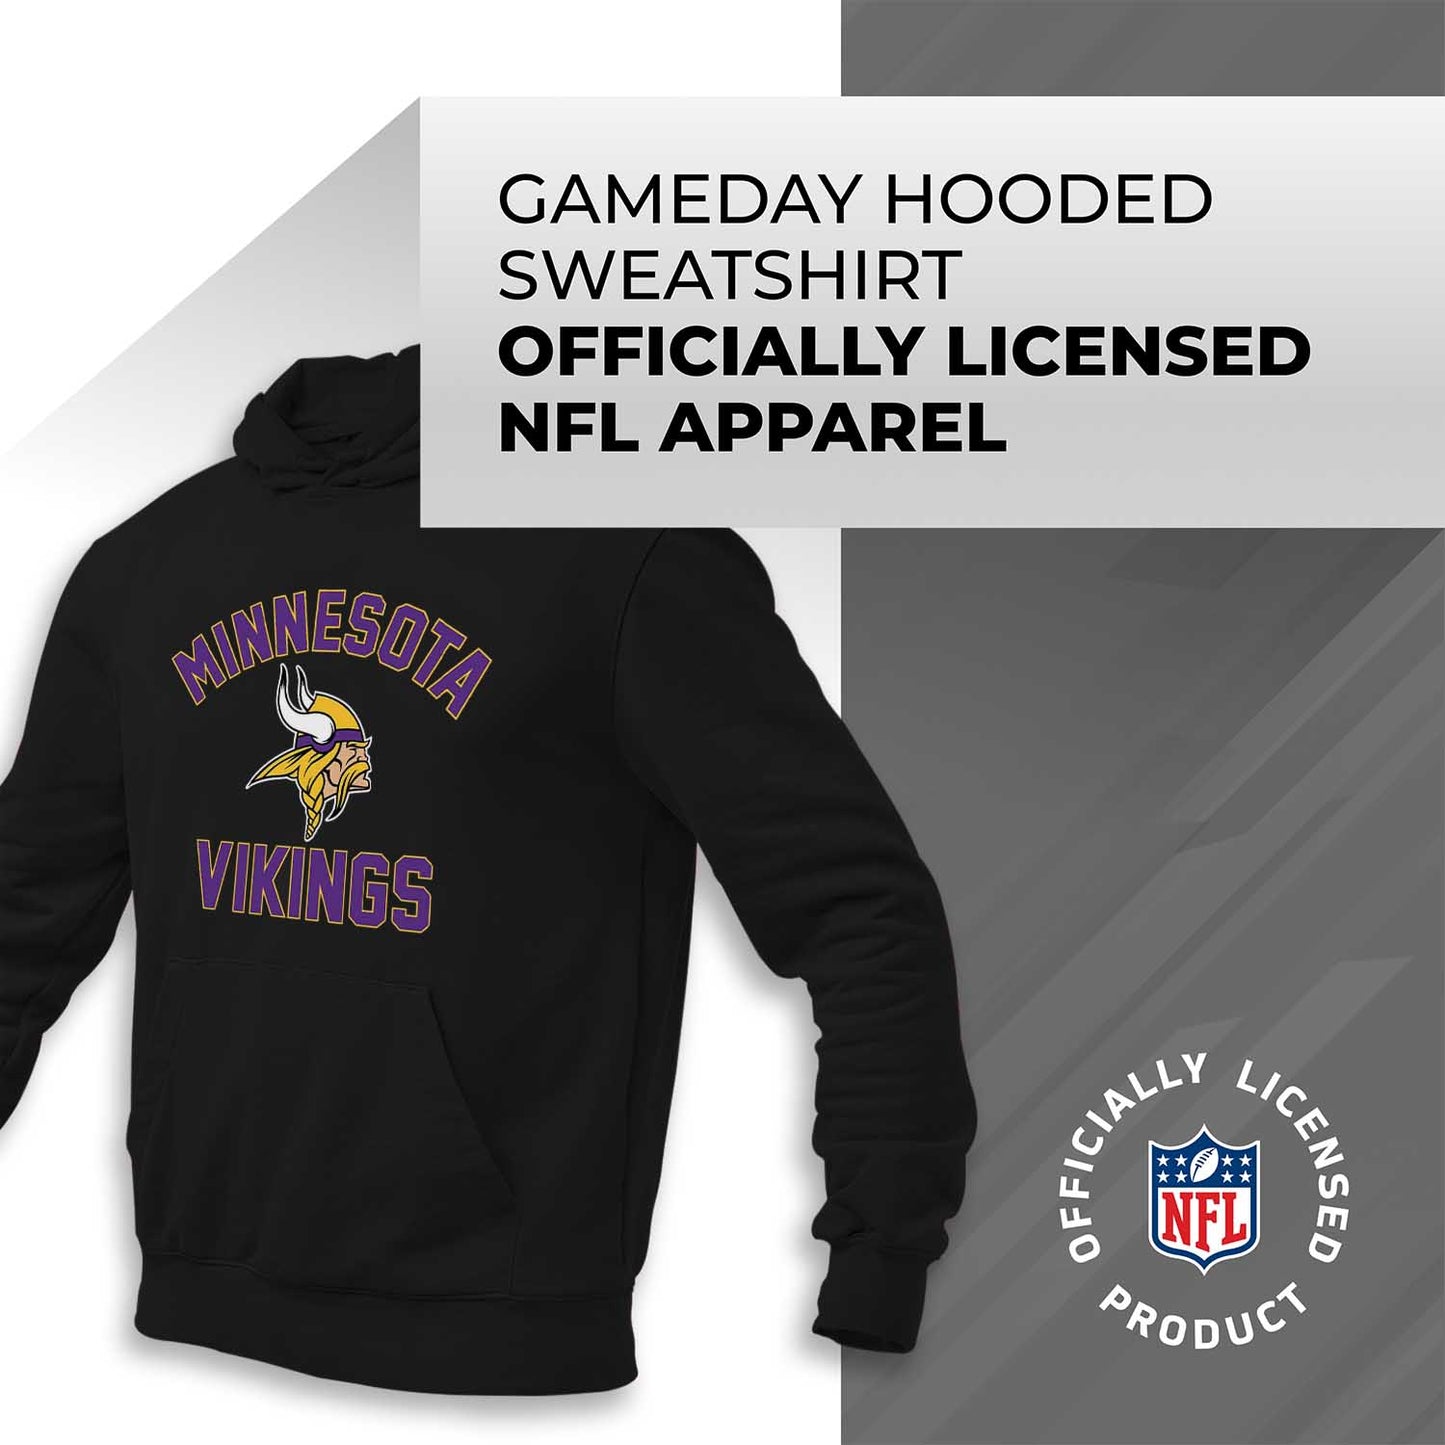 Minnesota Vikings NFL Adult Gameday Hooded Sweatshirt - Black